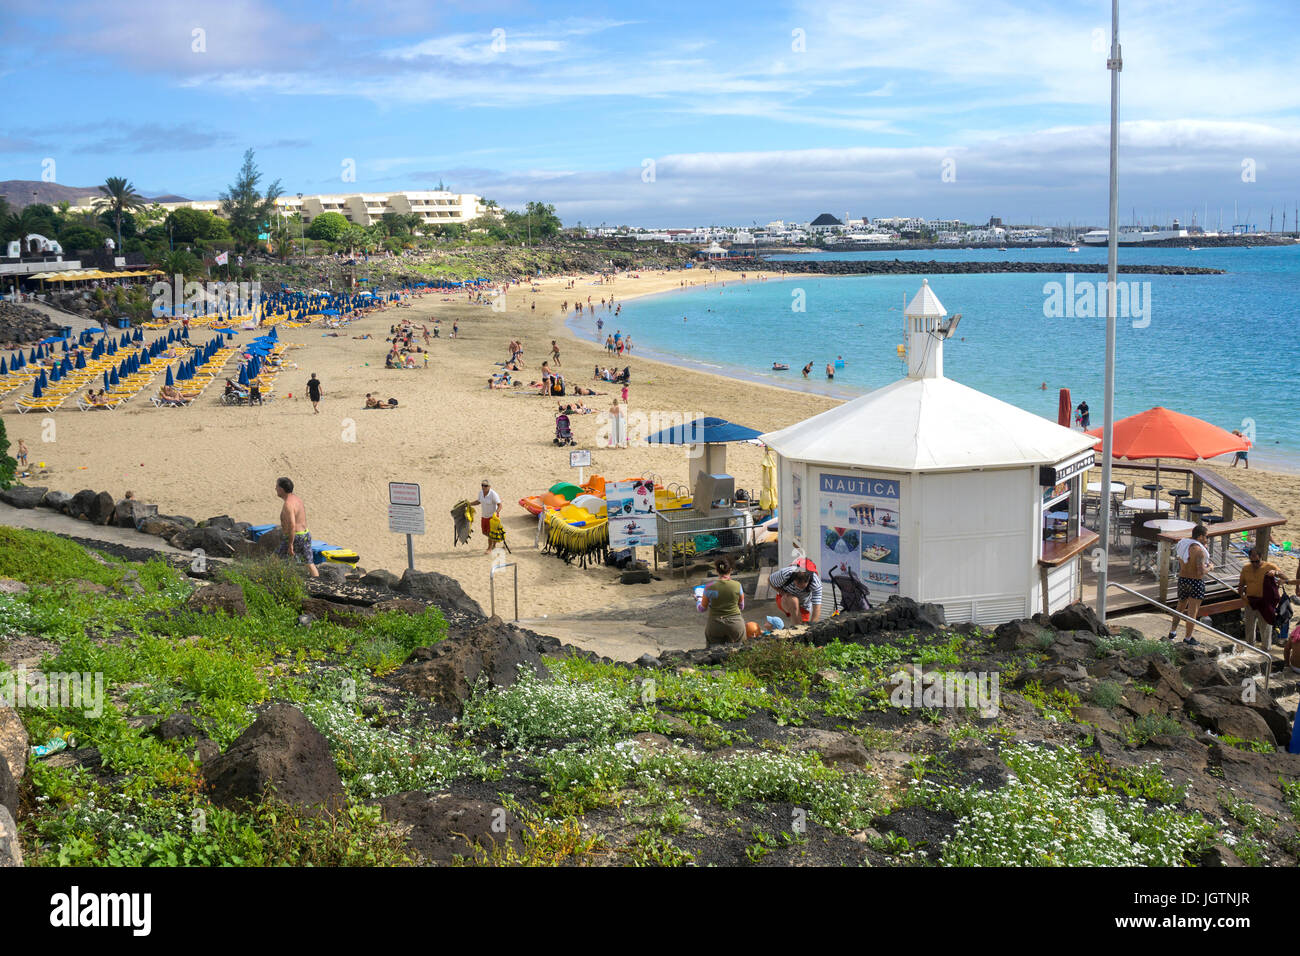 Die Strandbar am Badestrand Playa Dorada in Playa Blanca, Lanzarote, Kanarische Inseln, Europa | Strand Bar am Strand Playa Dorada, Playa Blanca, Lanzarote Stockfoto